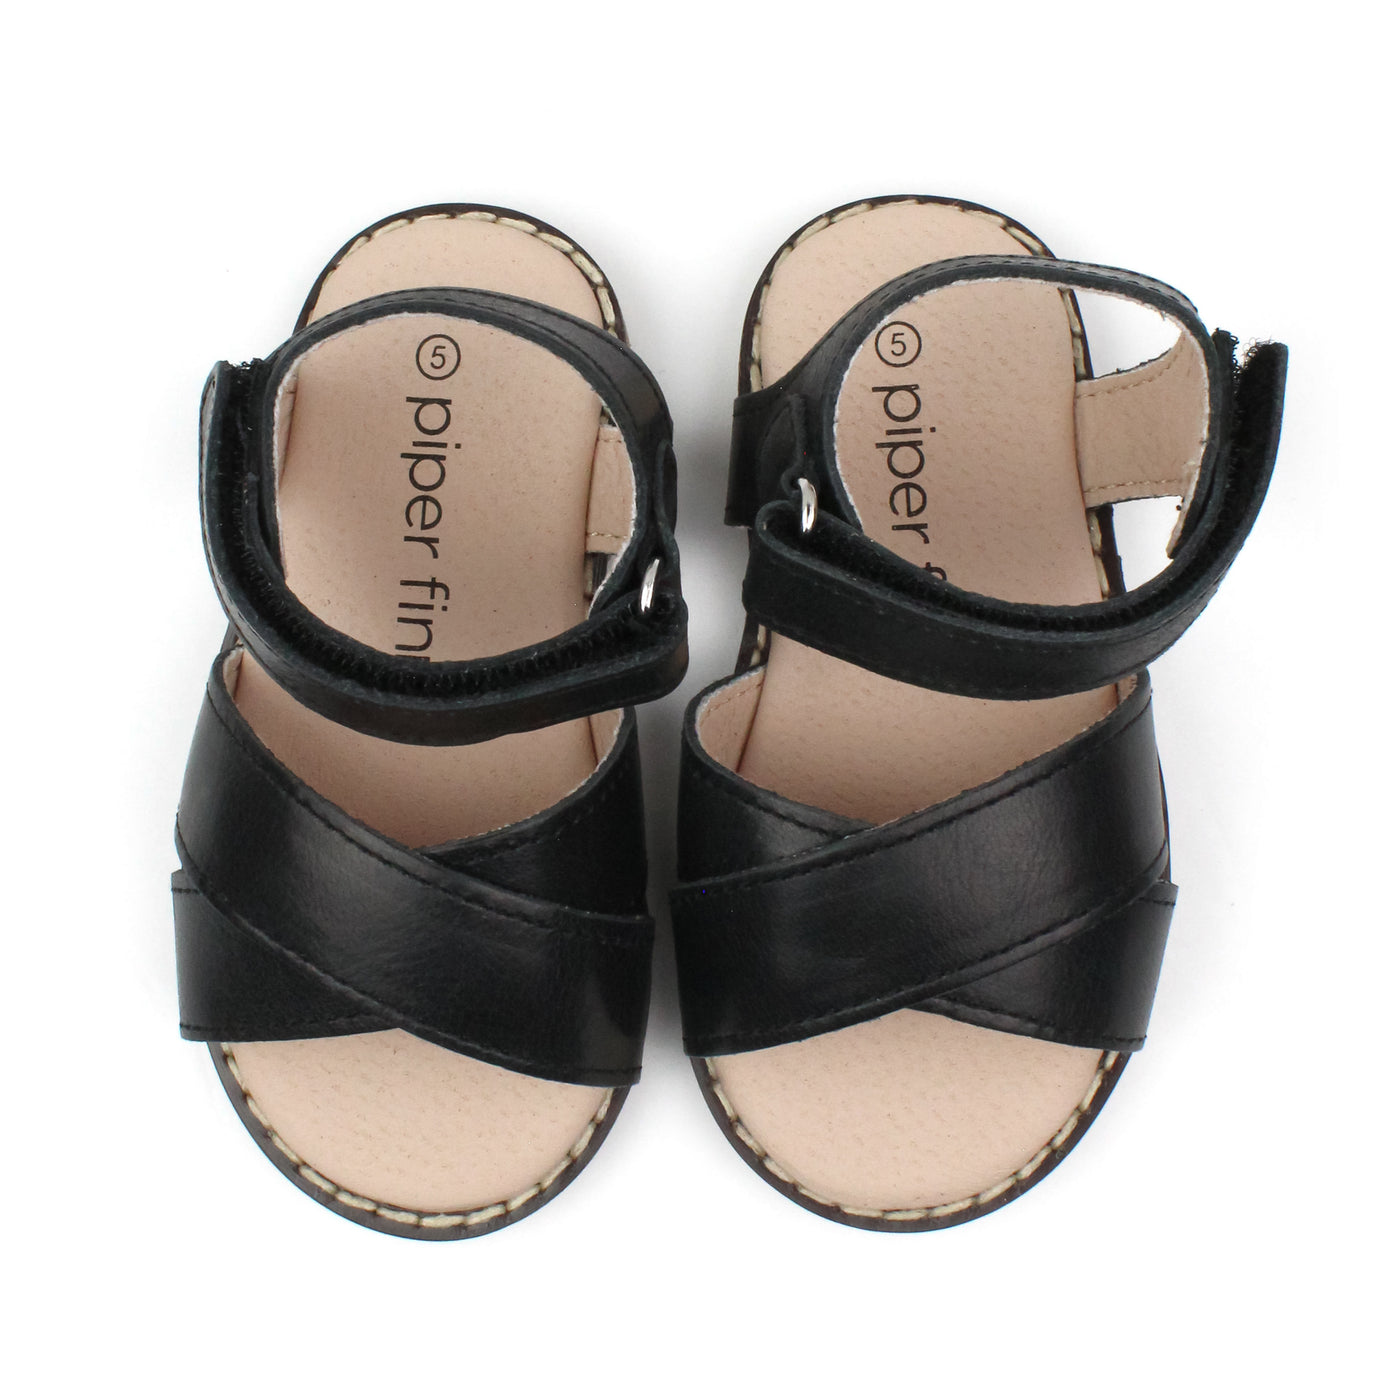 Black - Classic Sandal